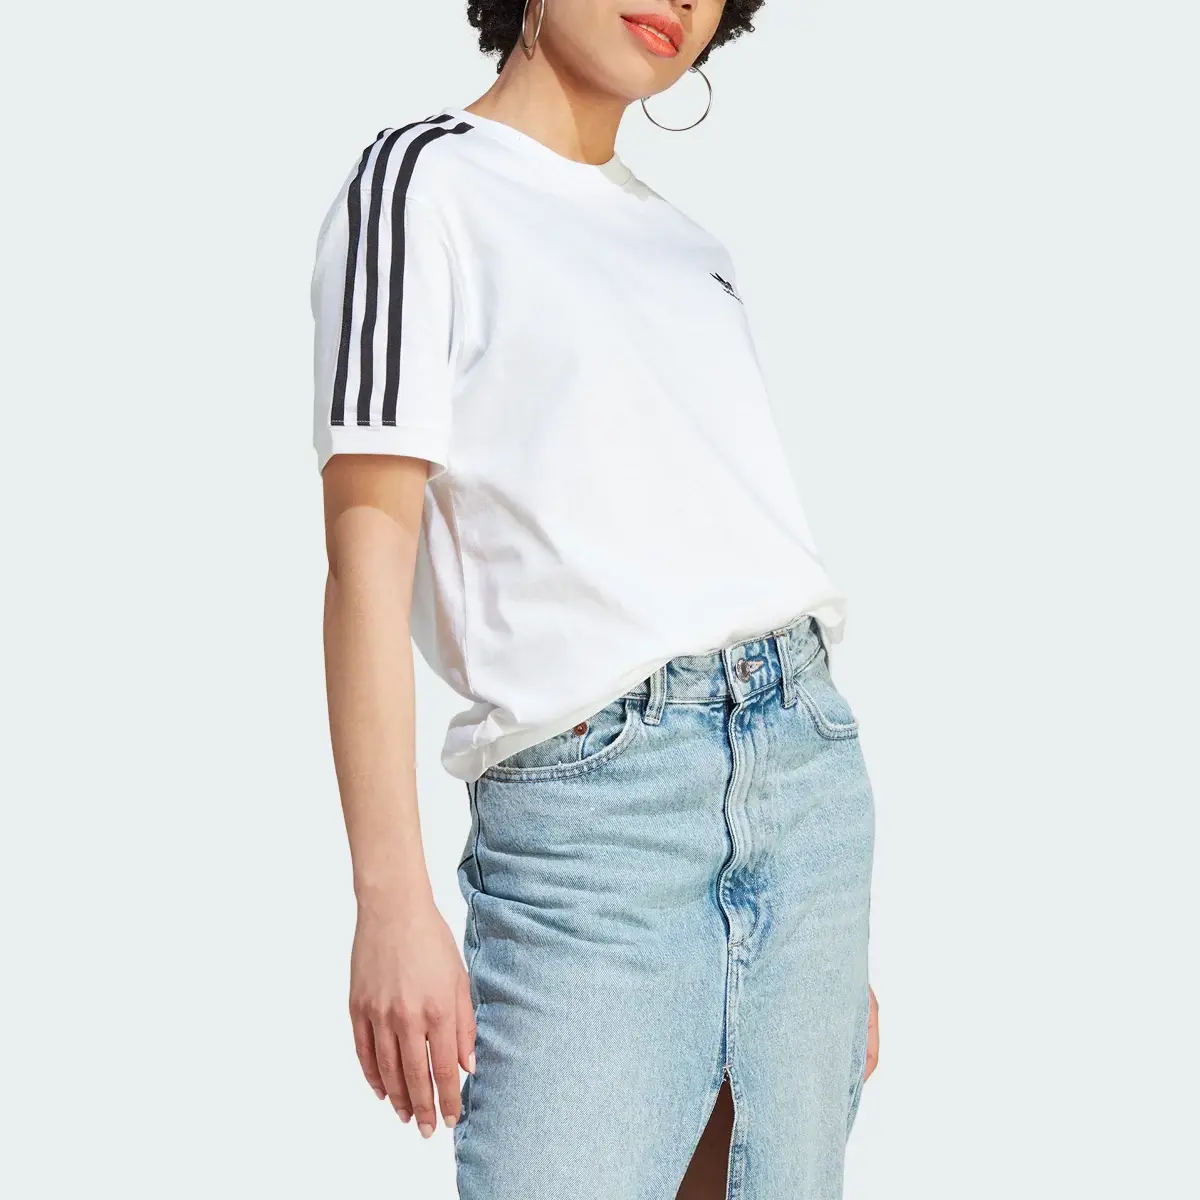 Adidas T-shirt 3-Stripes Adicolor Classics. 1